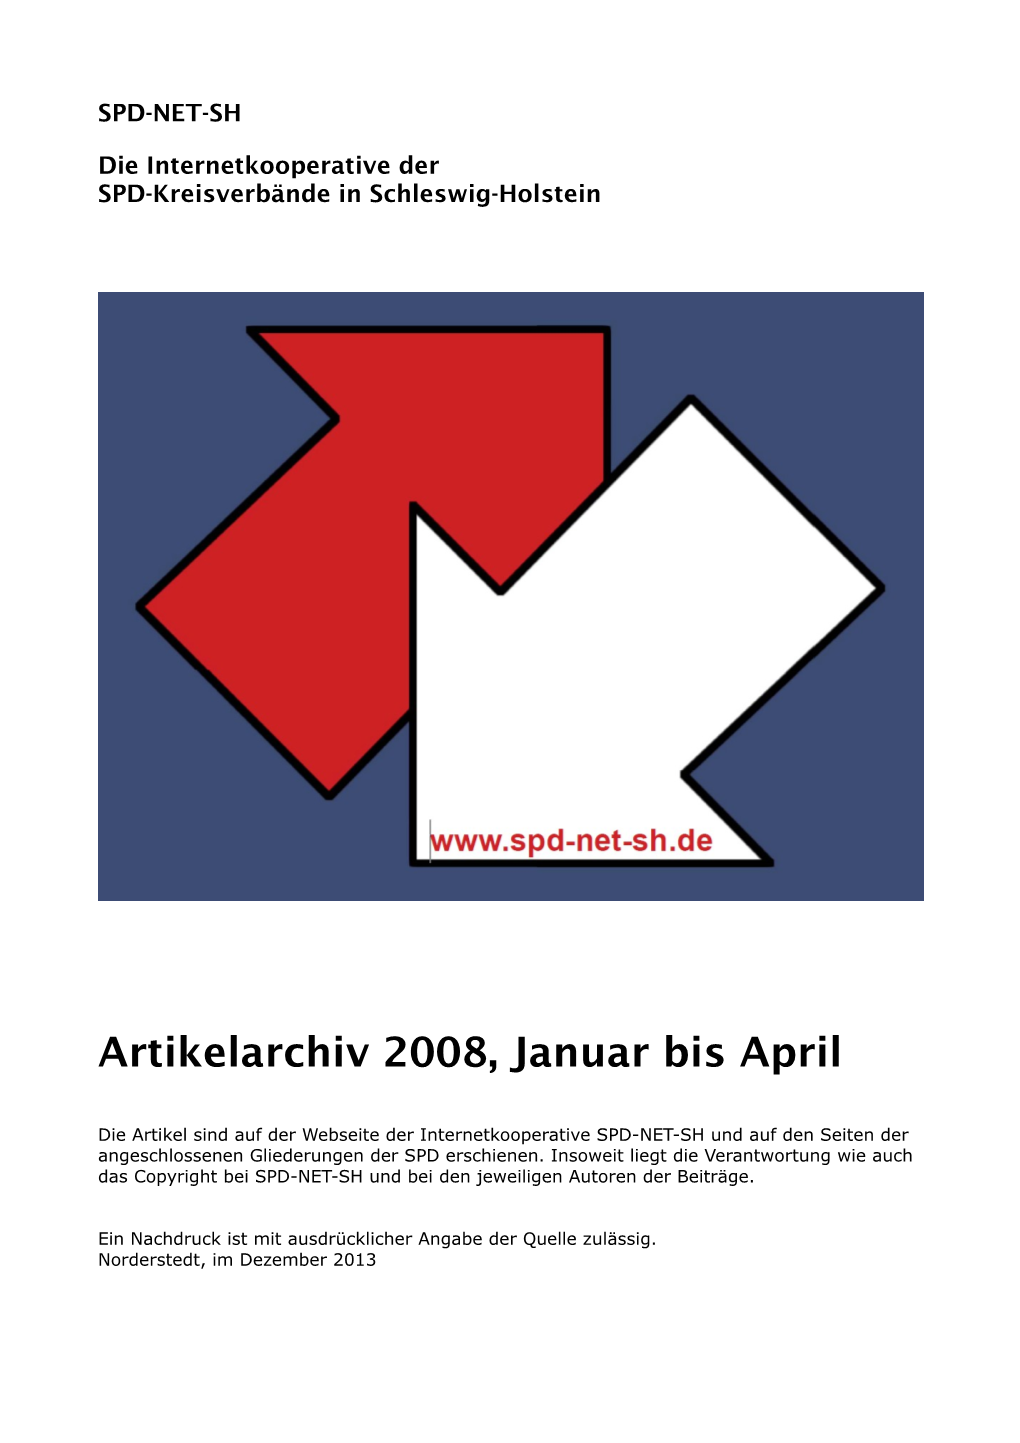 Artikelarchiv 2008, Januar Bis April